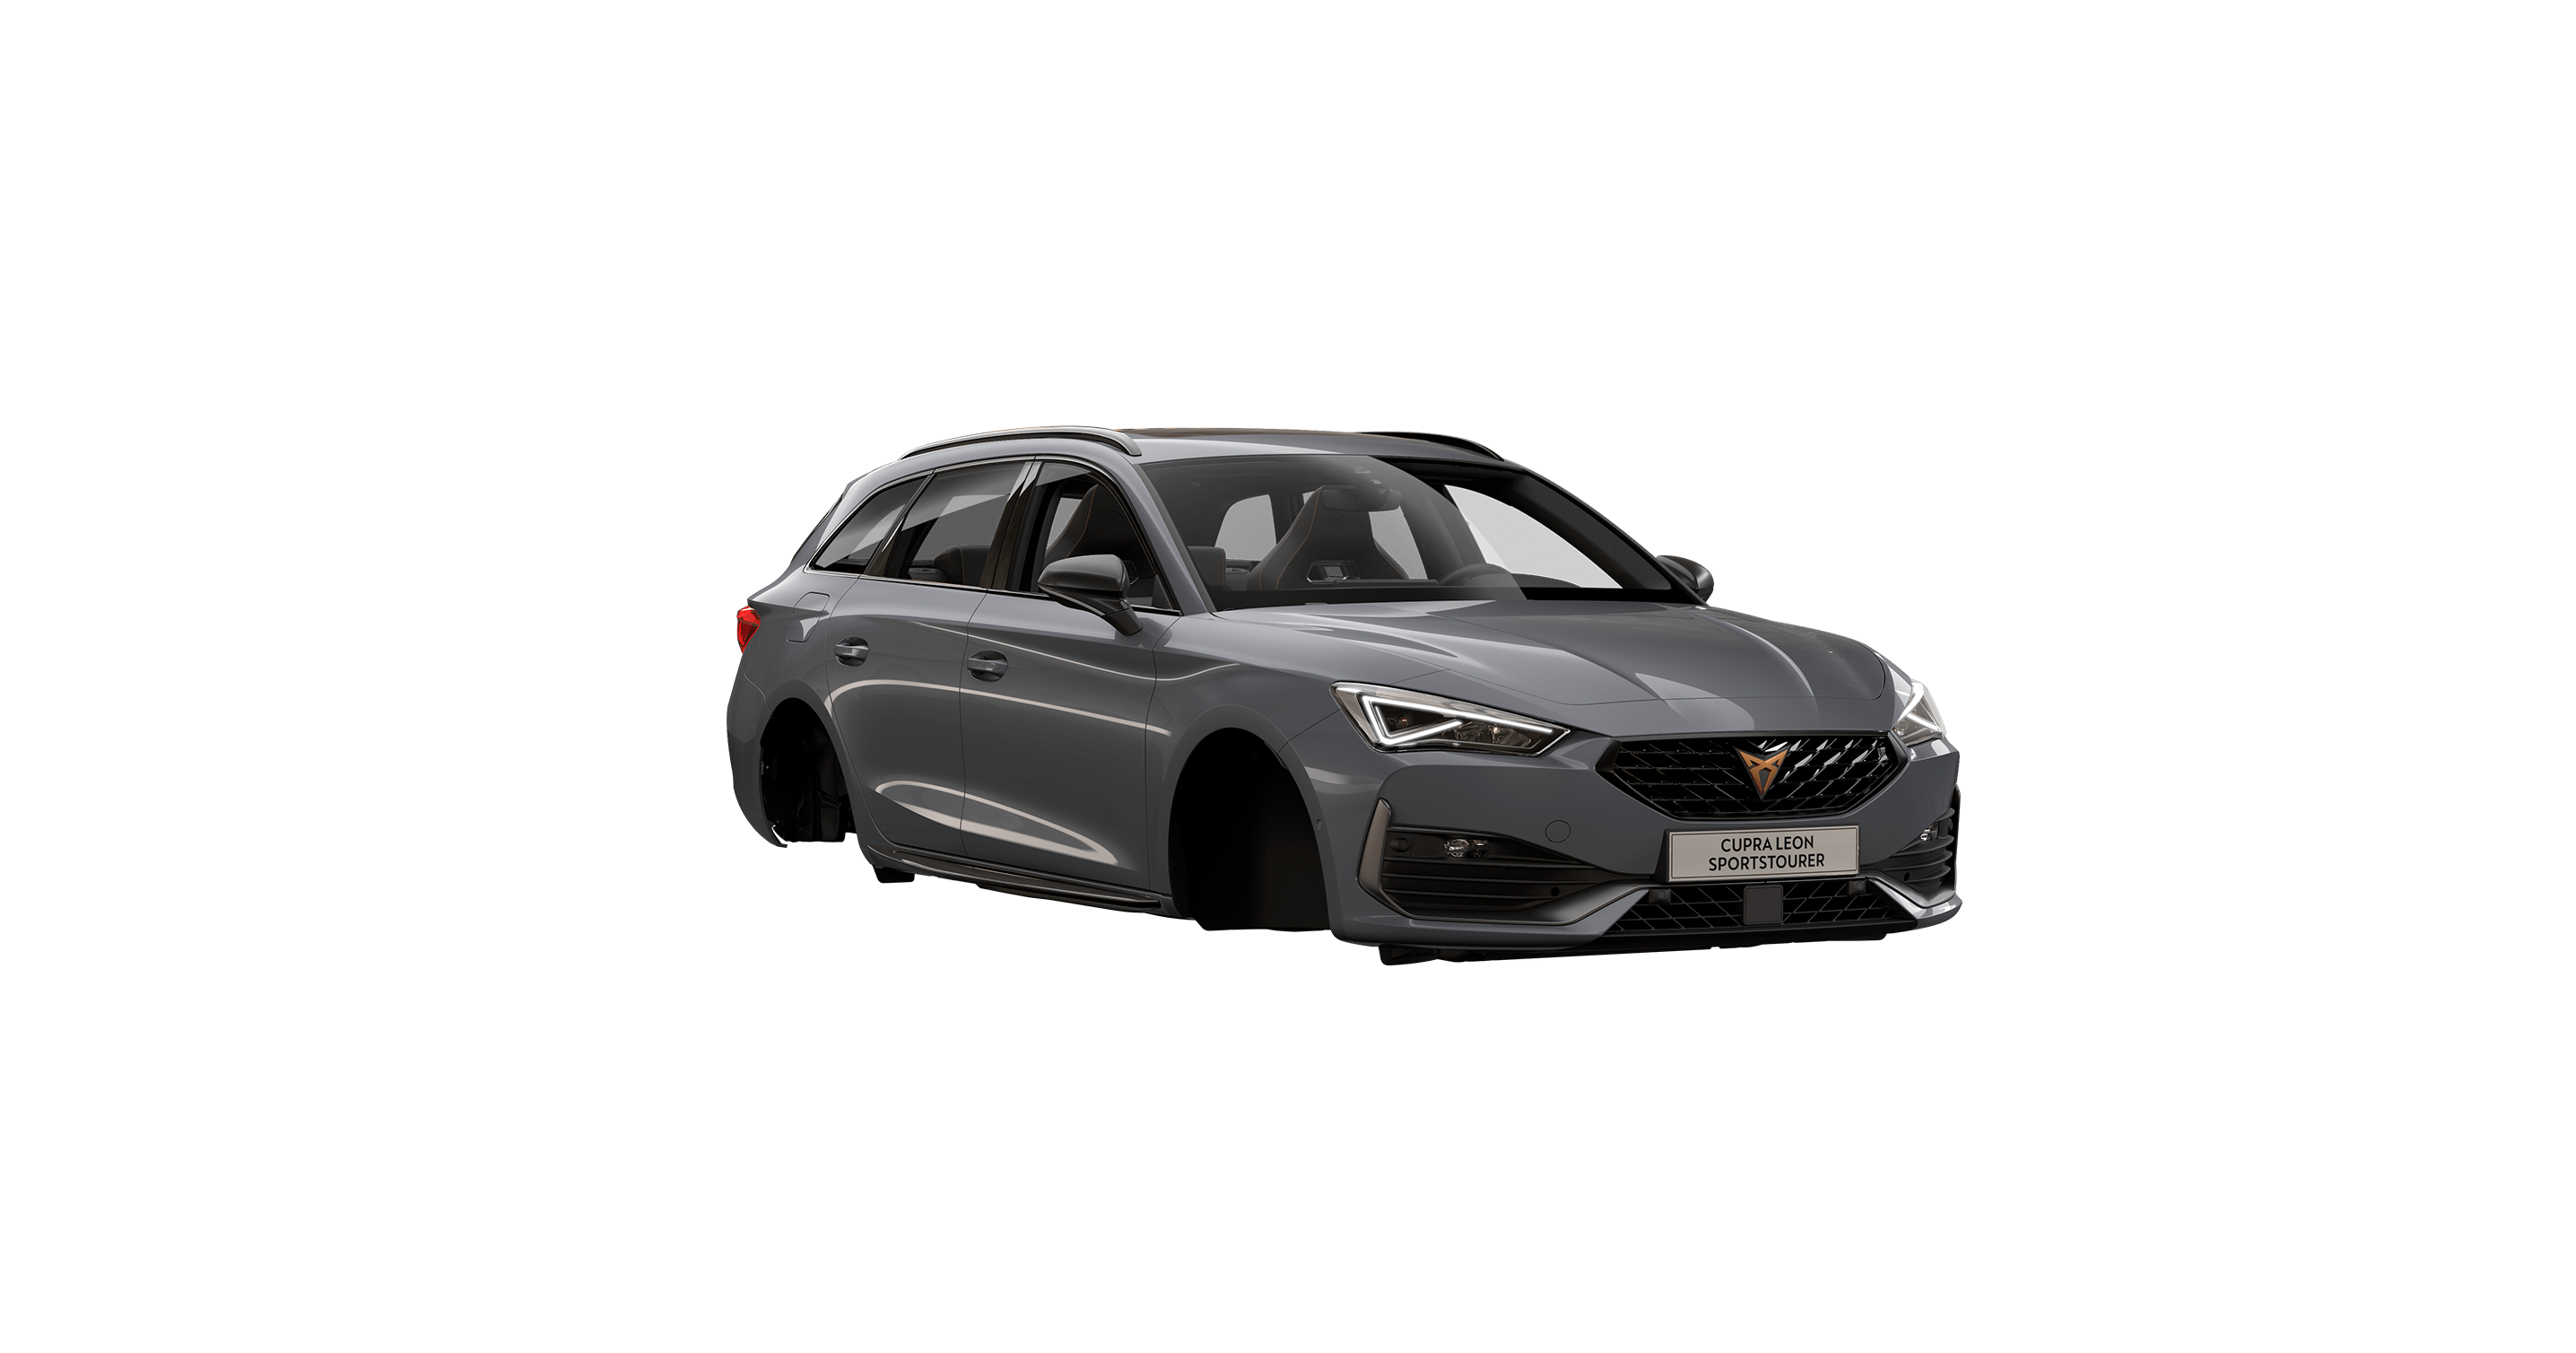 new CUPRA Leon Sportstourer ehybrid Family Sports Car available in graphene grey colour